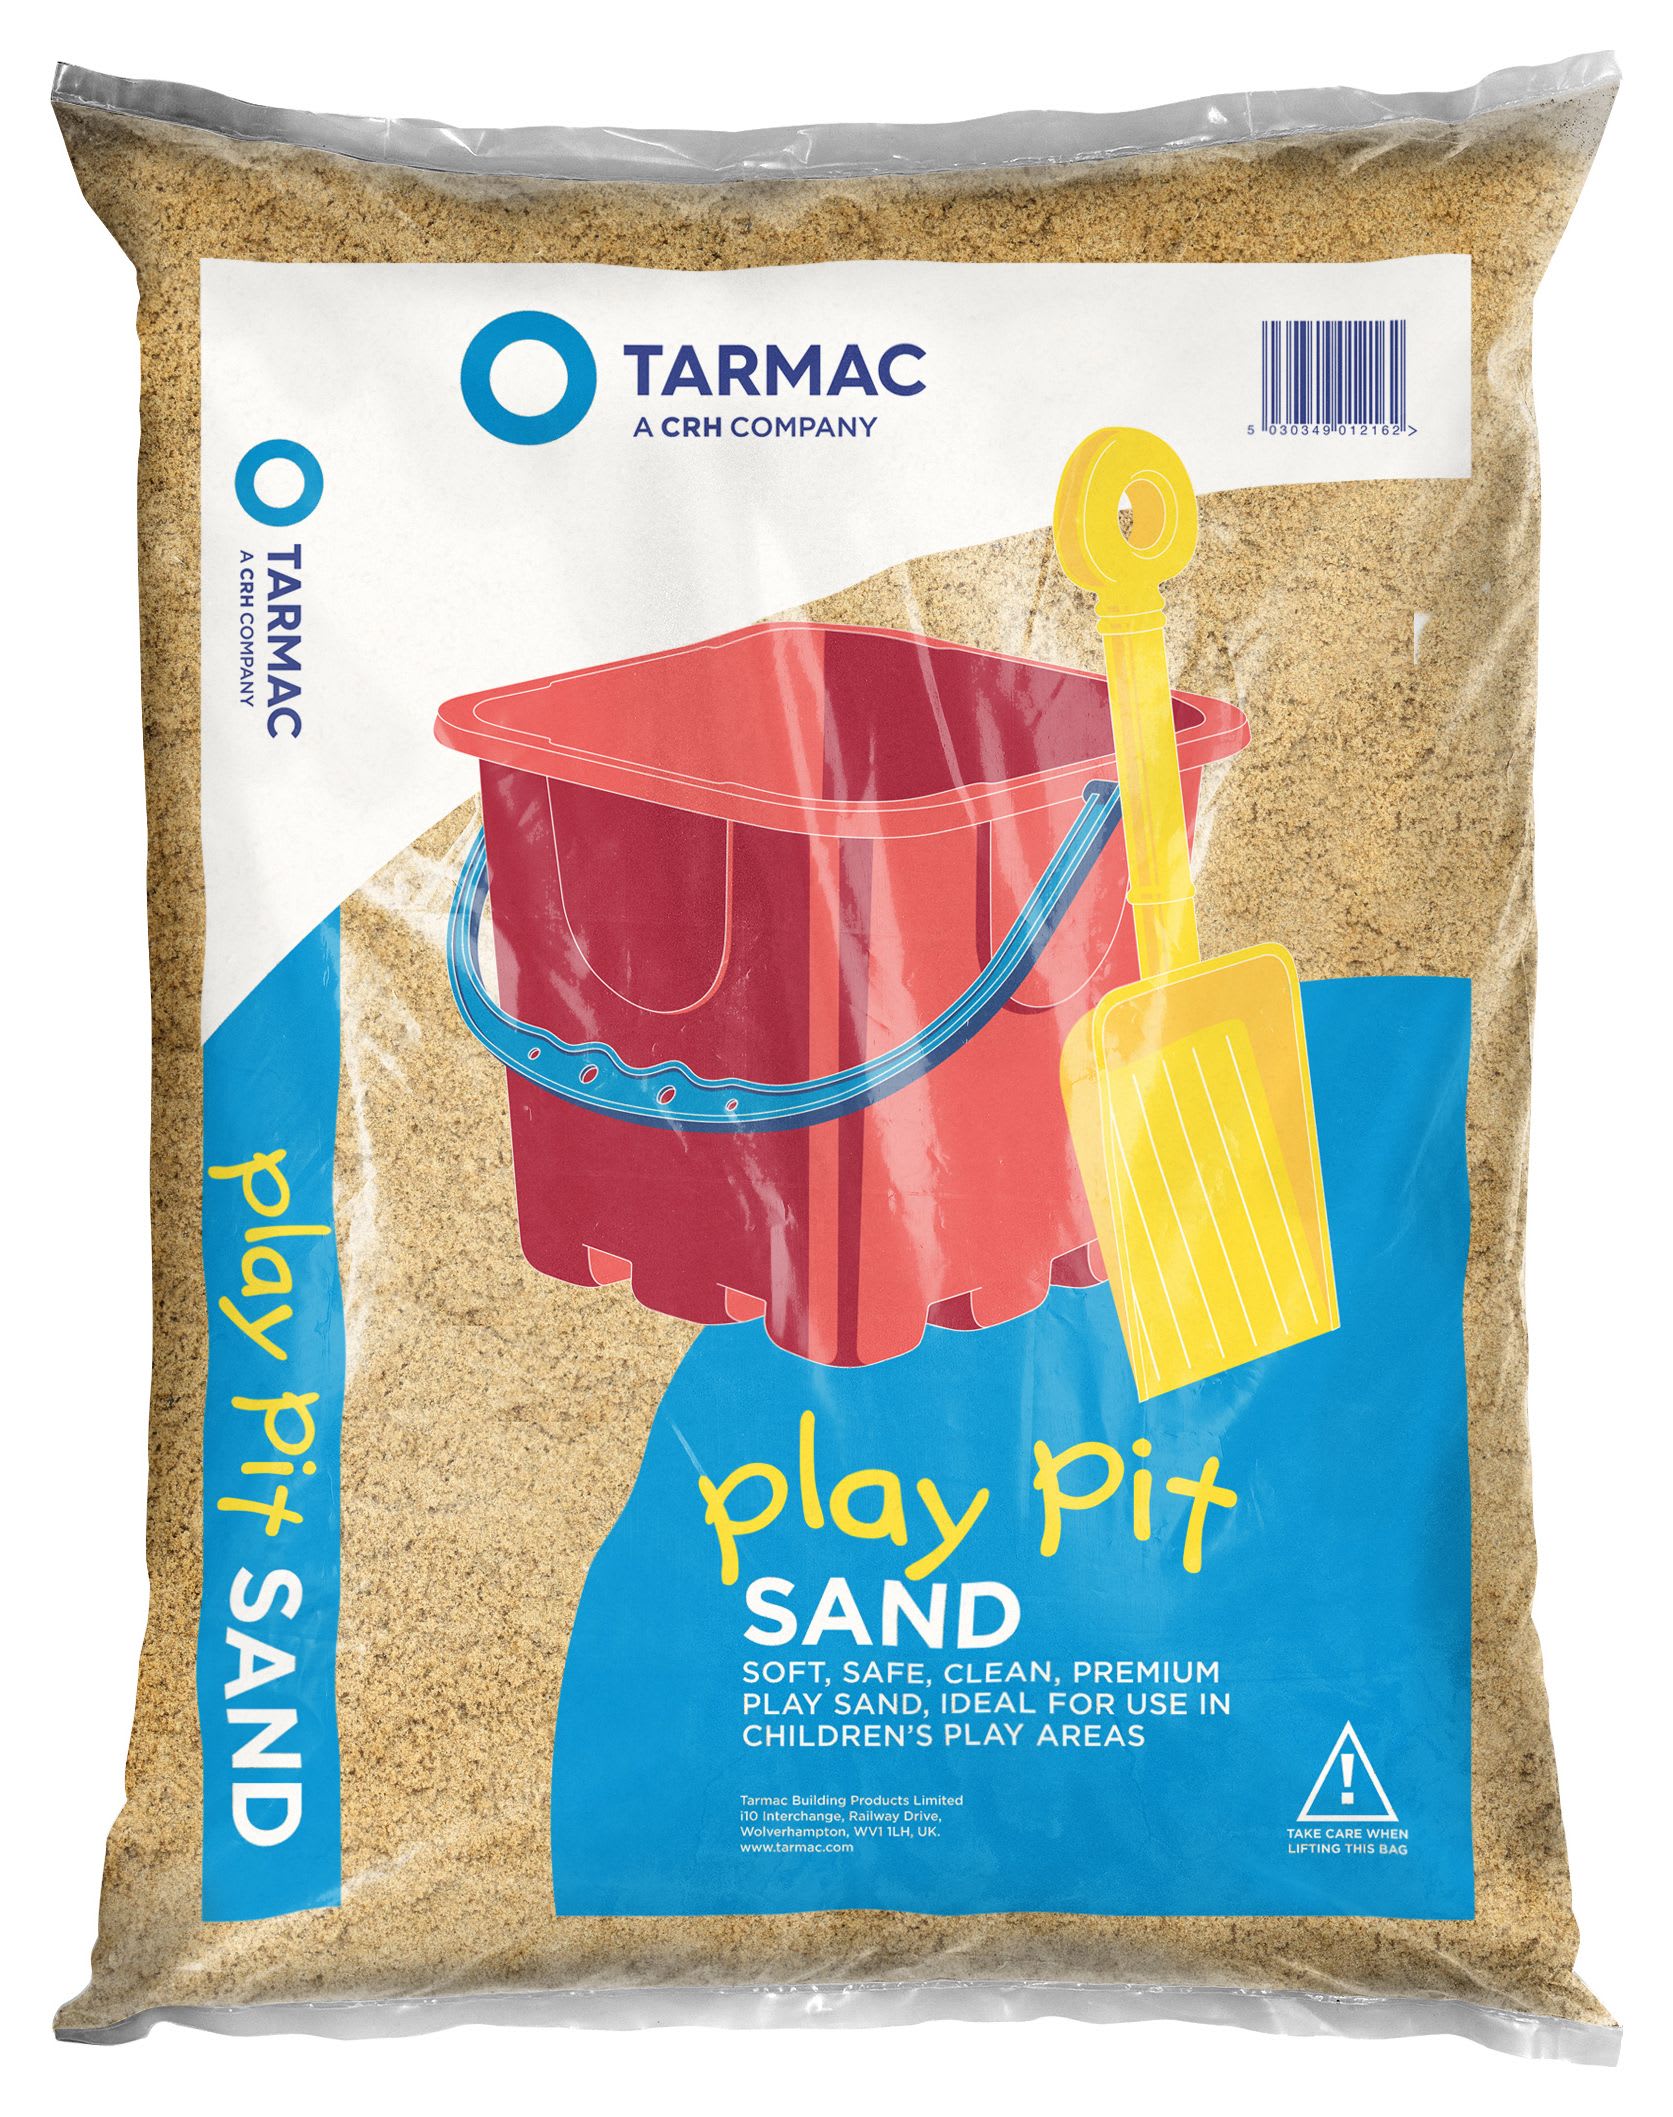 Tarmac Play Pit Sand - Large Bag